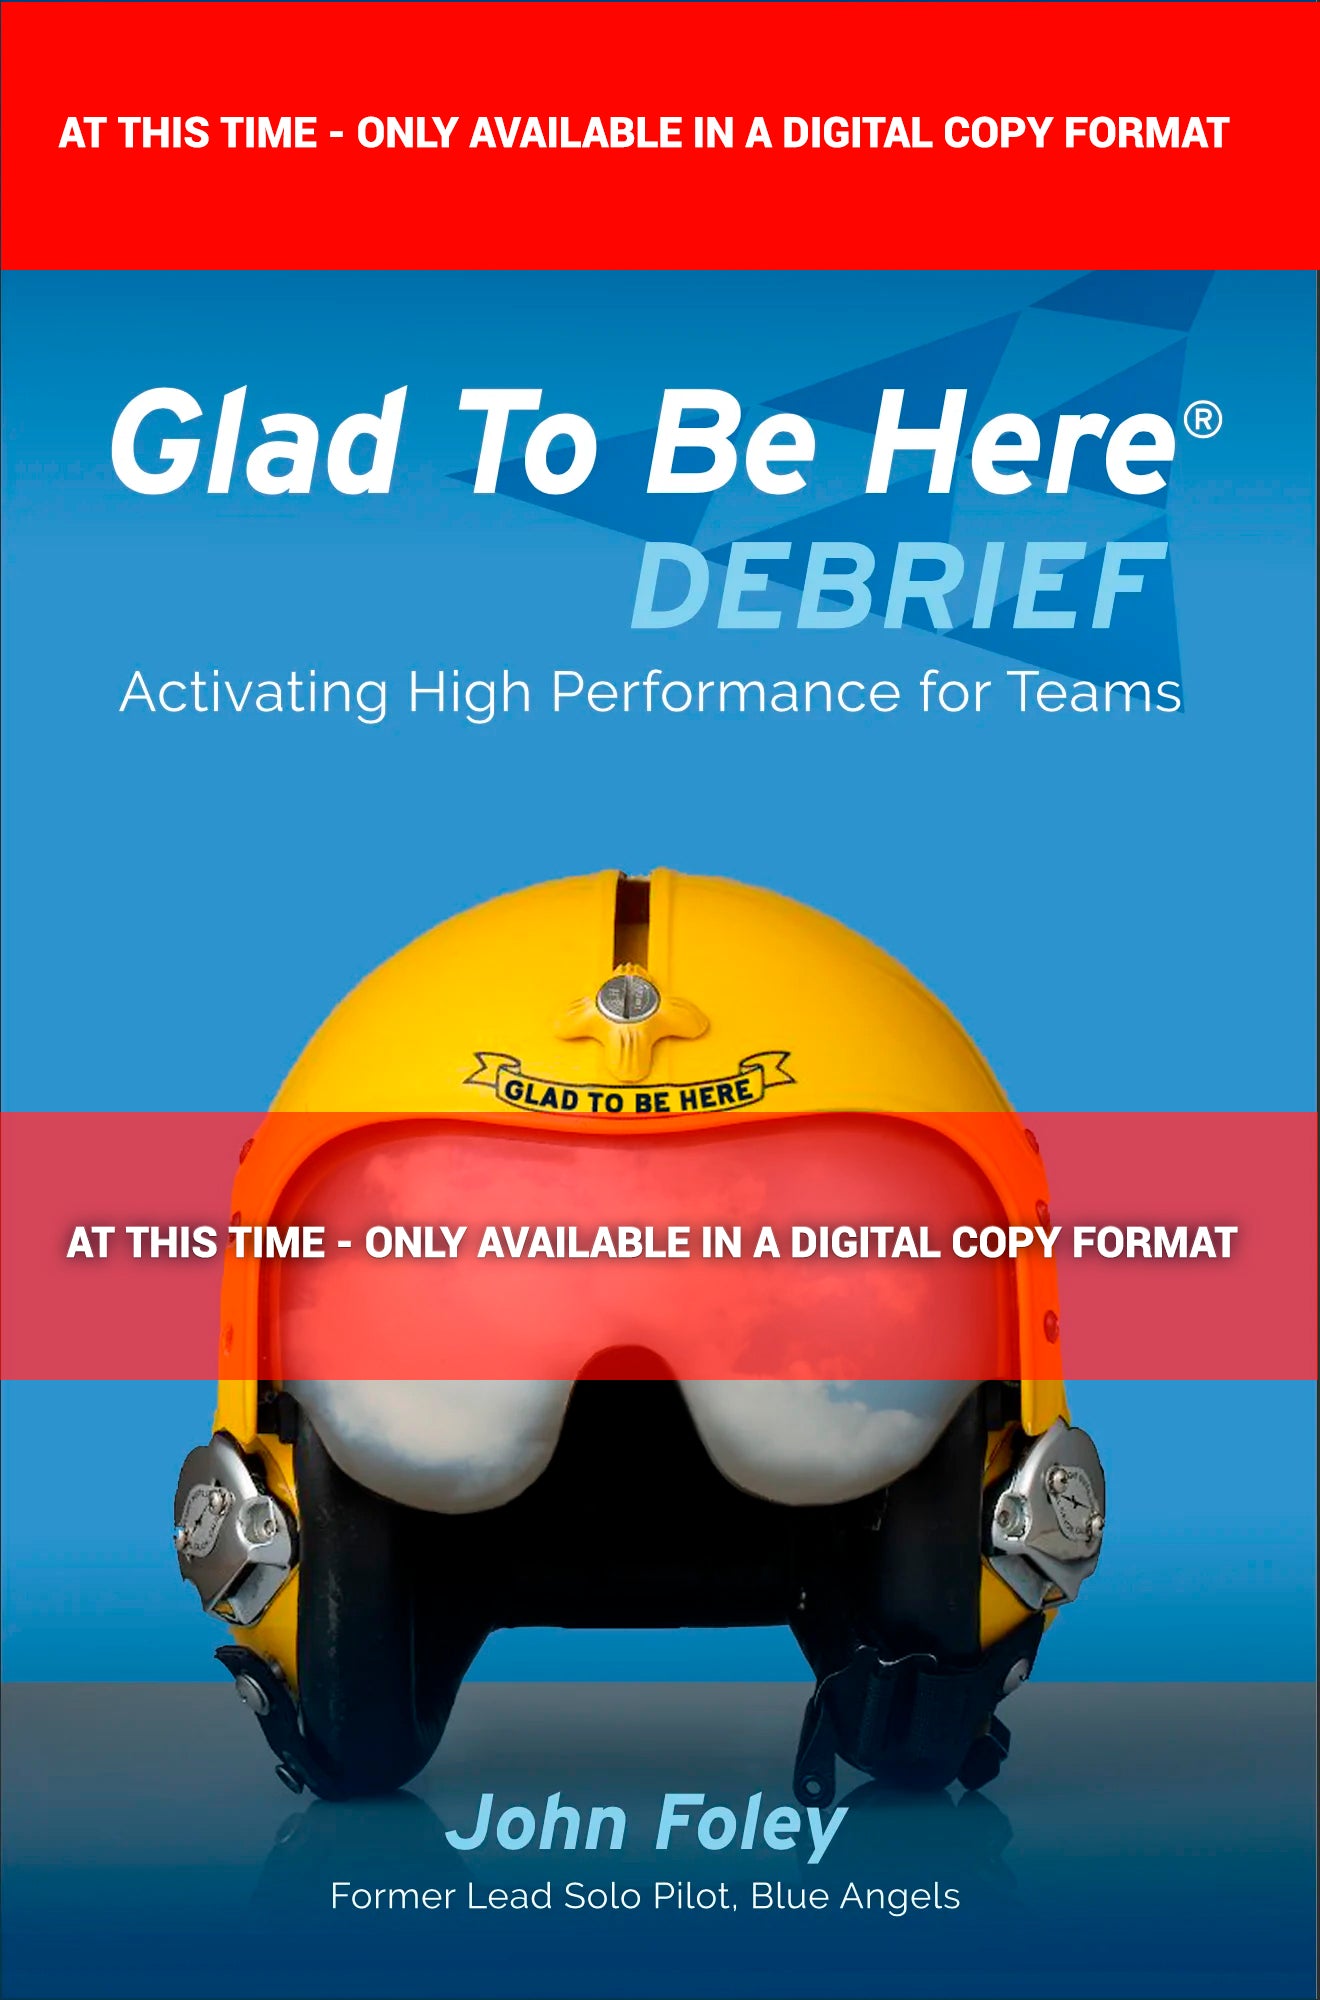 Glad To Be Here Debrief Program - Digital Book